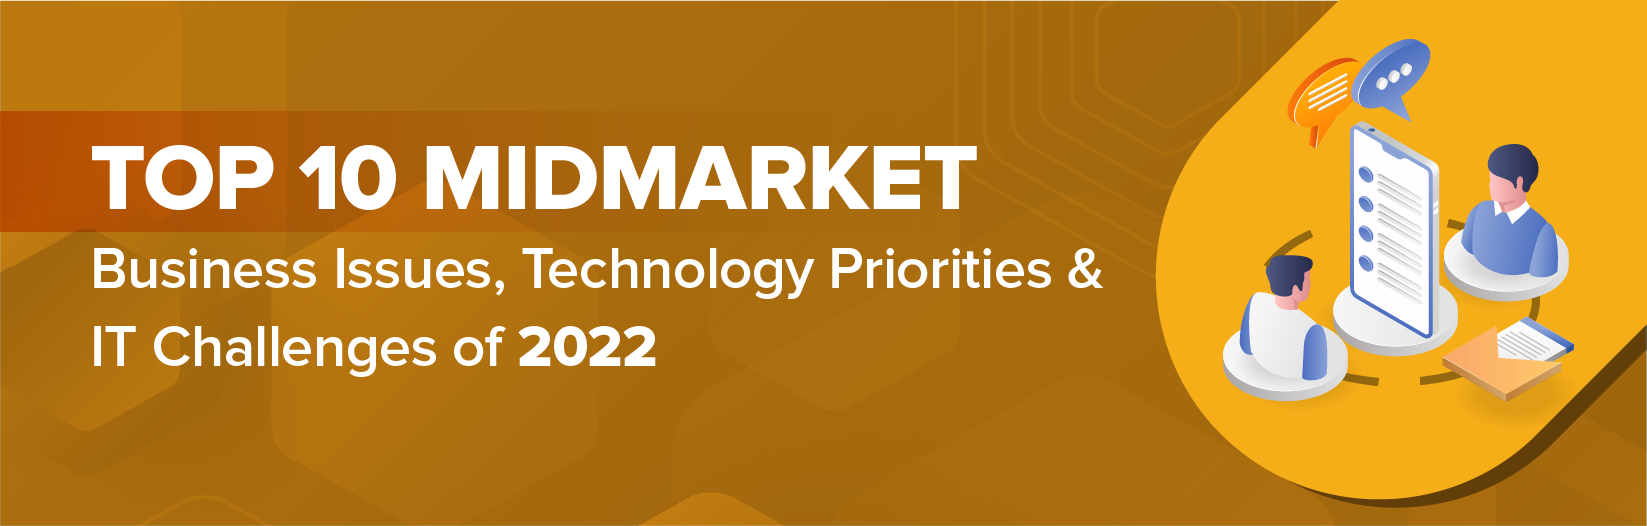 2022 Top 10 Midmarket - Business Issues, IT Priorities, IT Challenges Infographic